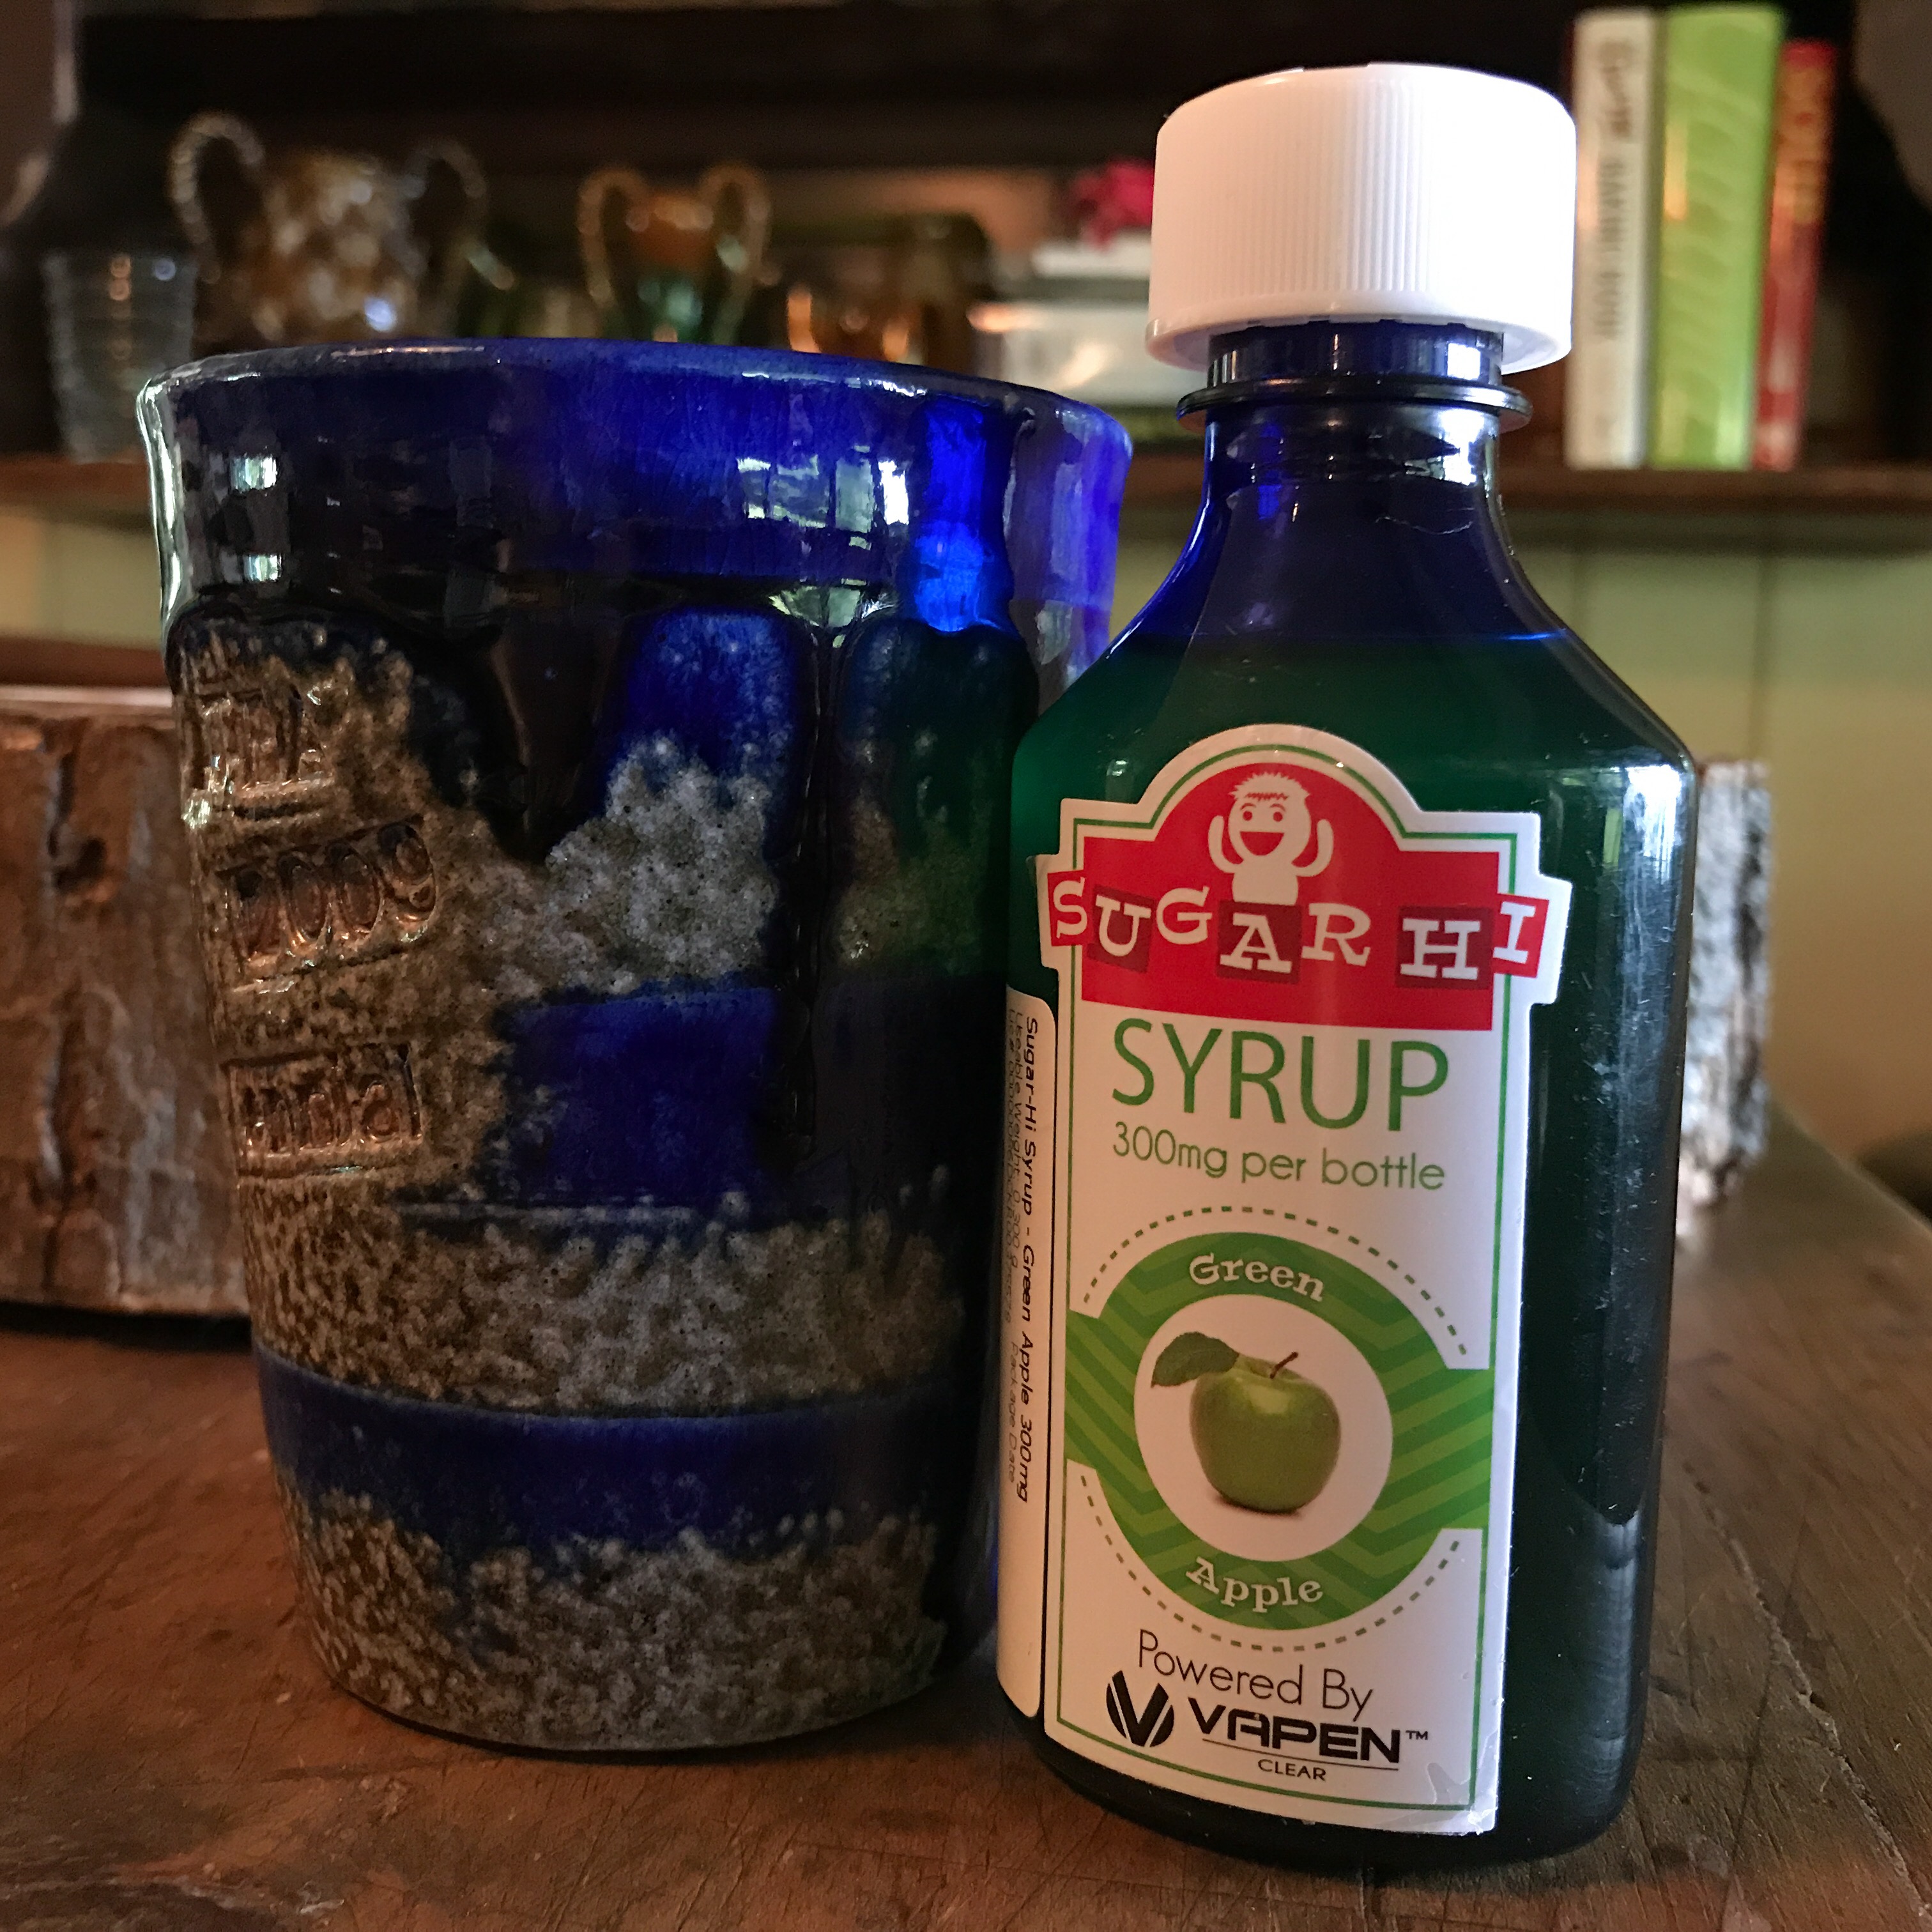 VapenClear SugarHi liquid Cannabis Syrup